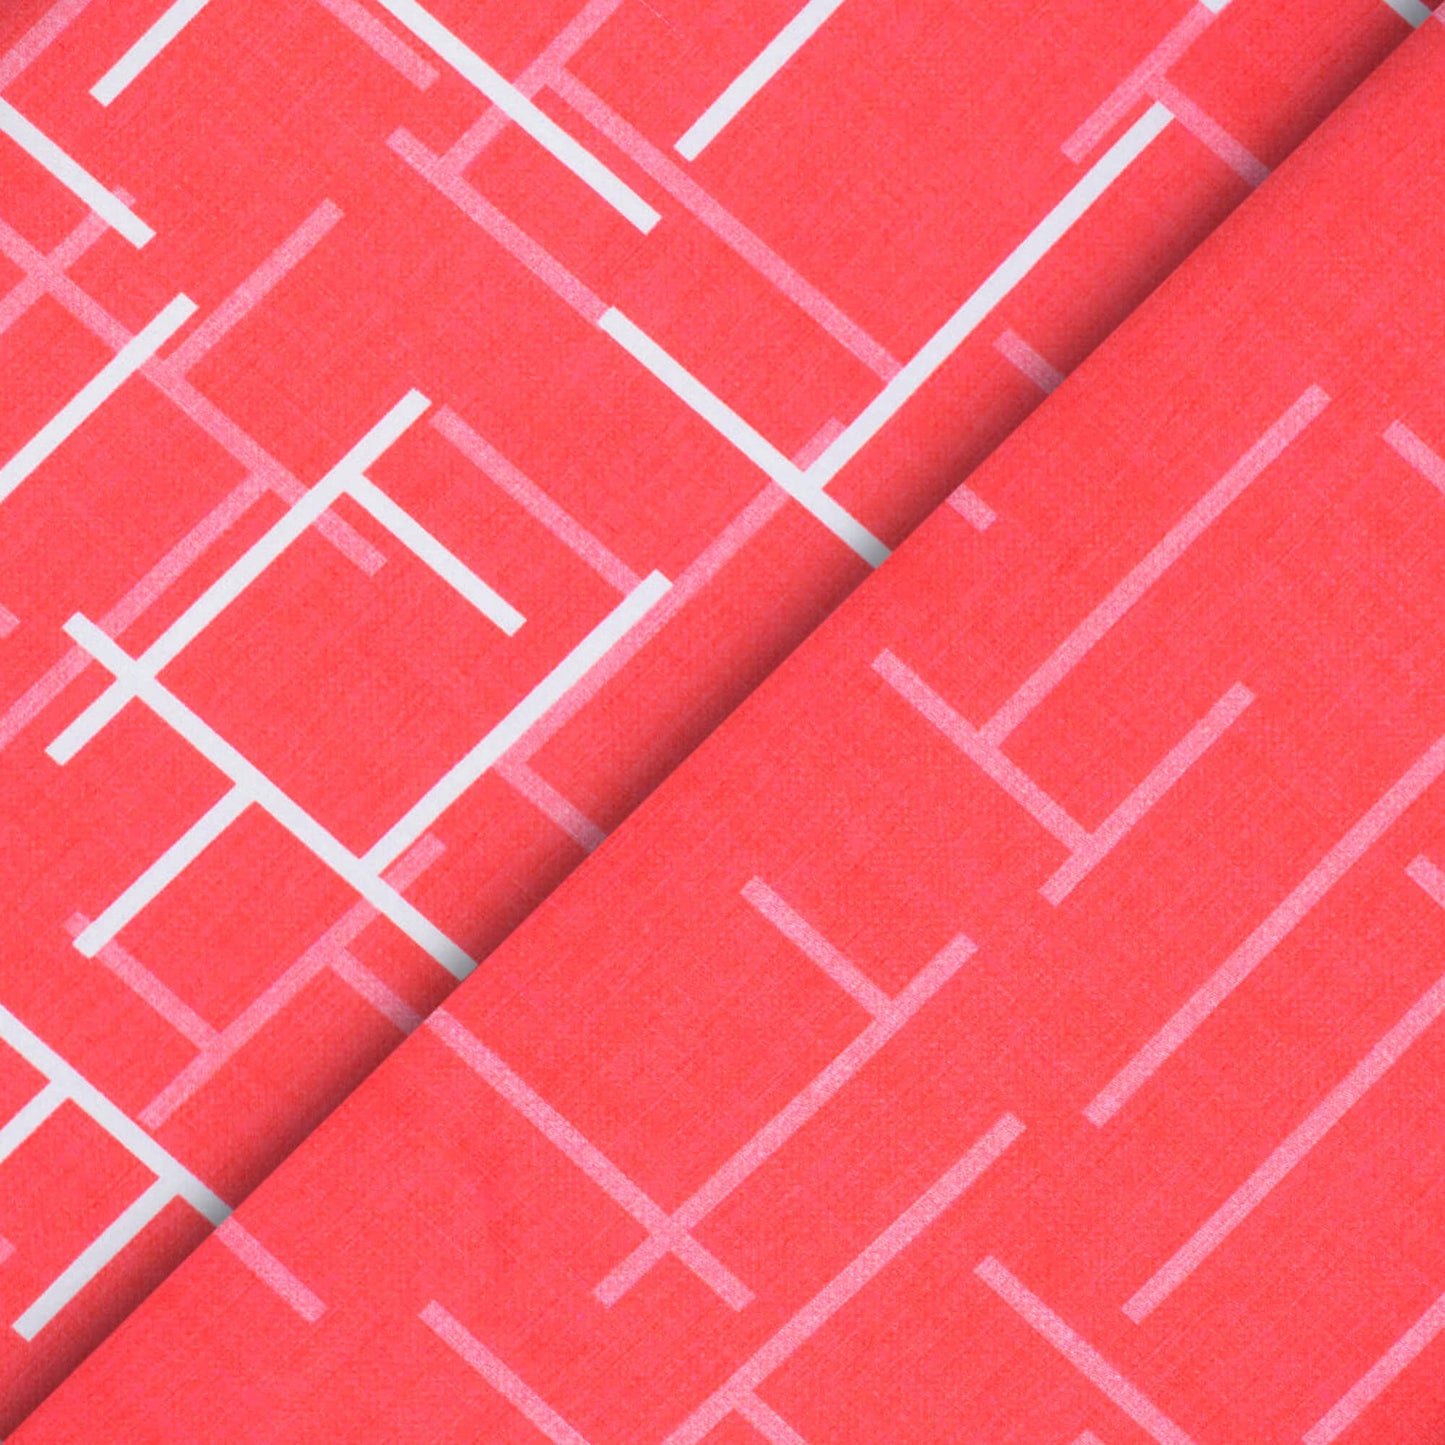 Cerise Pink Geometric Pattern Digital Print Crepe Silk Fabric